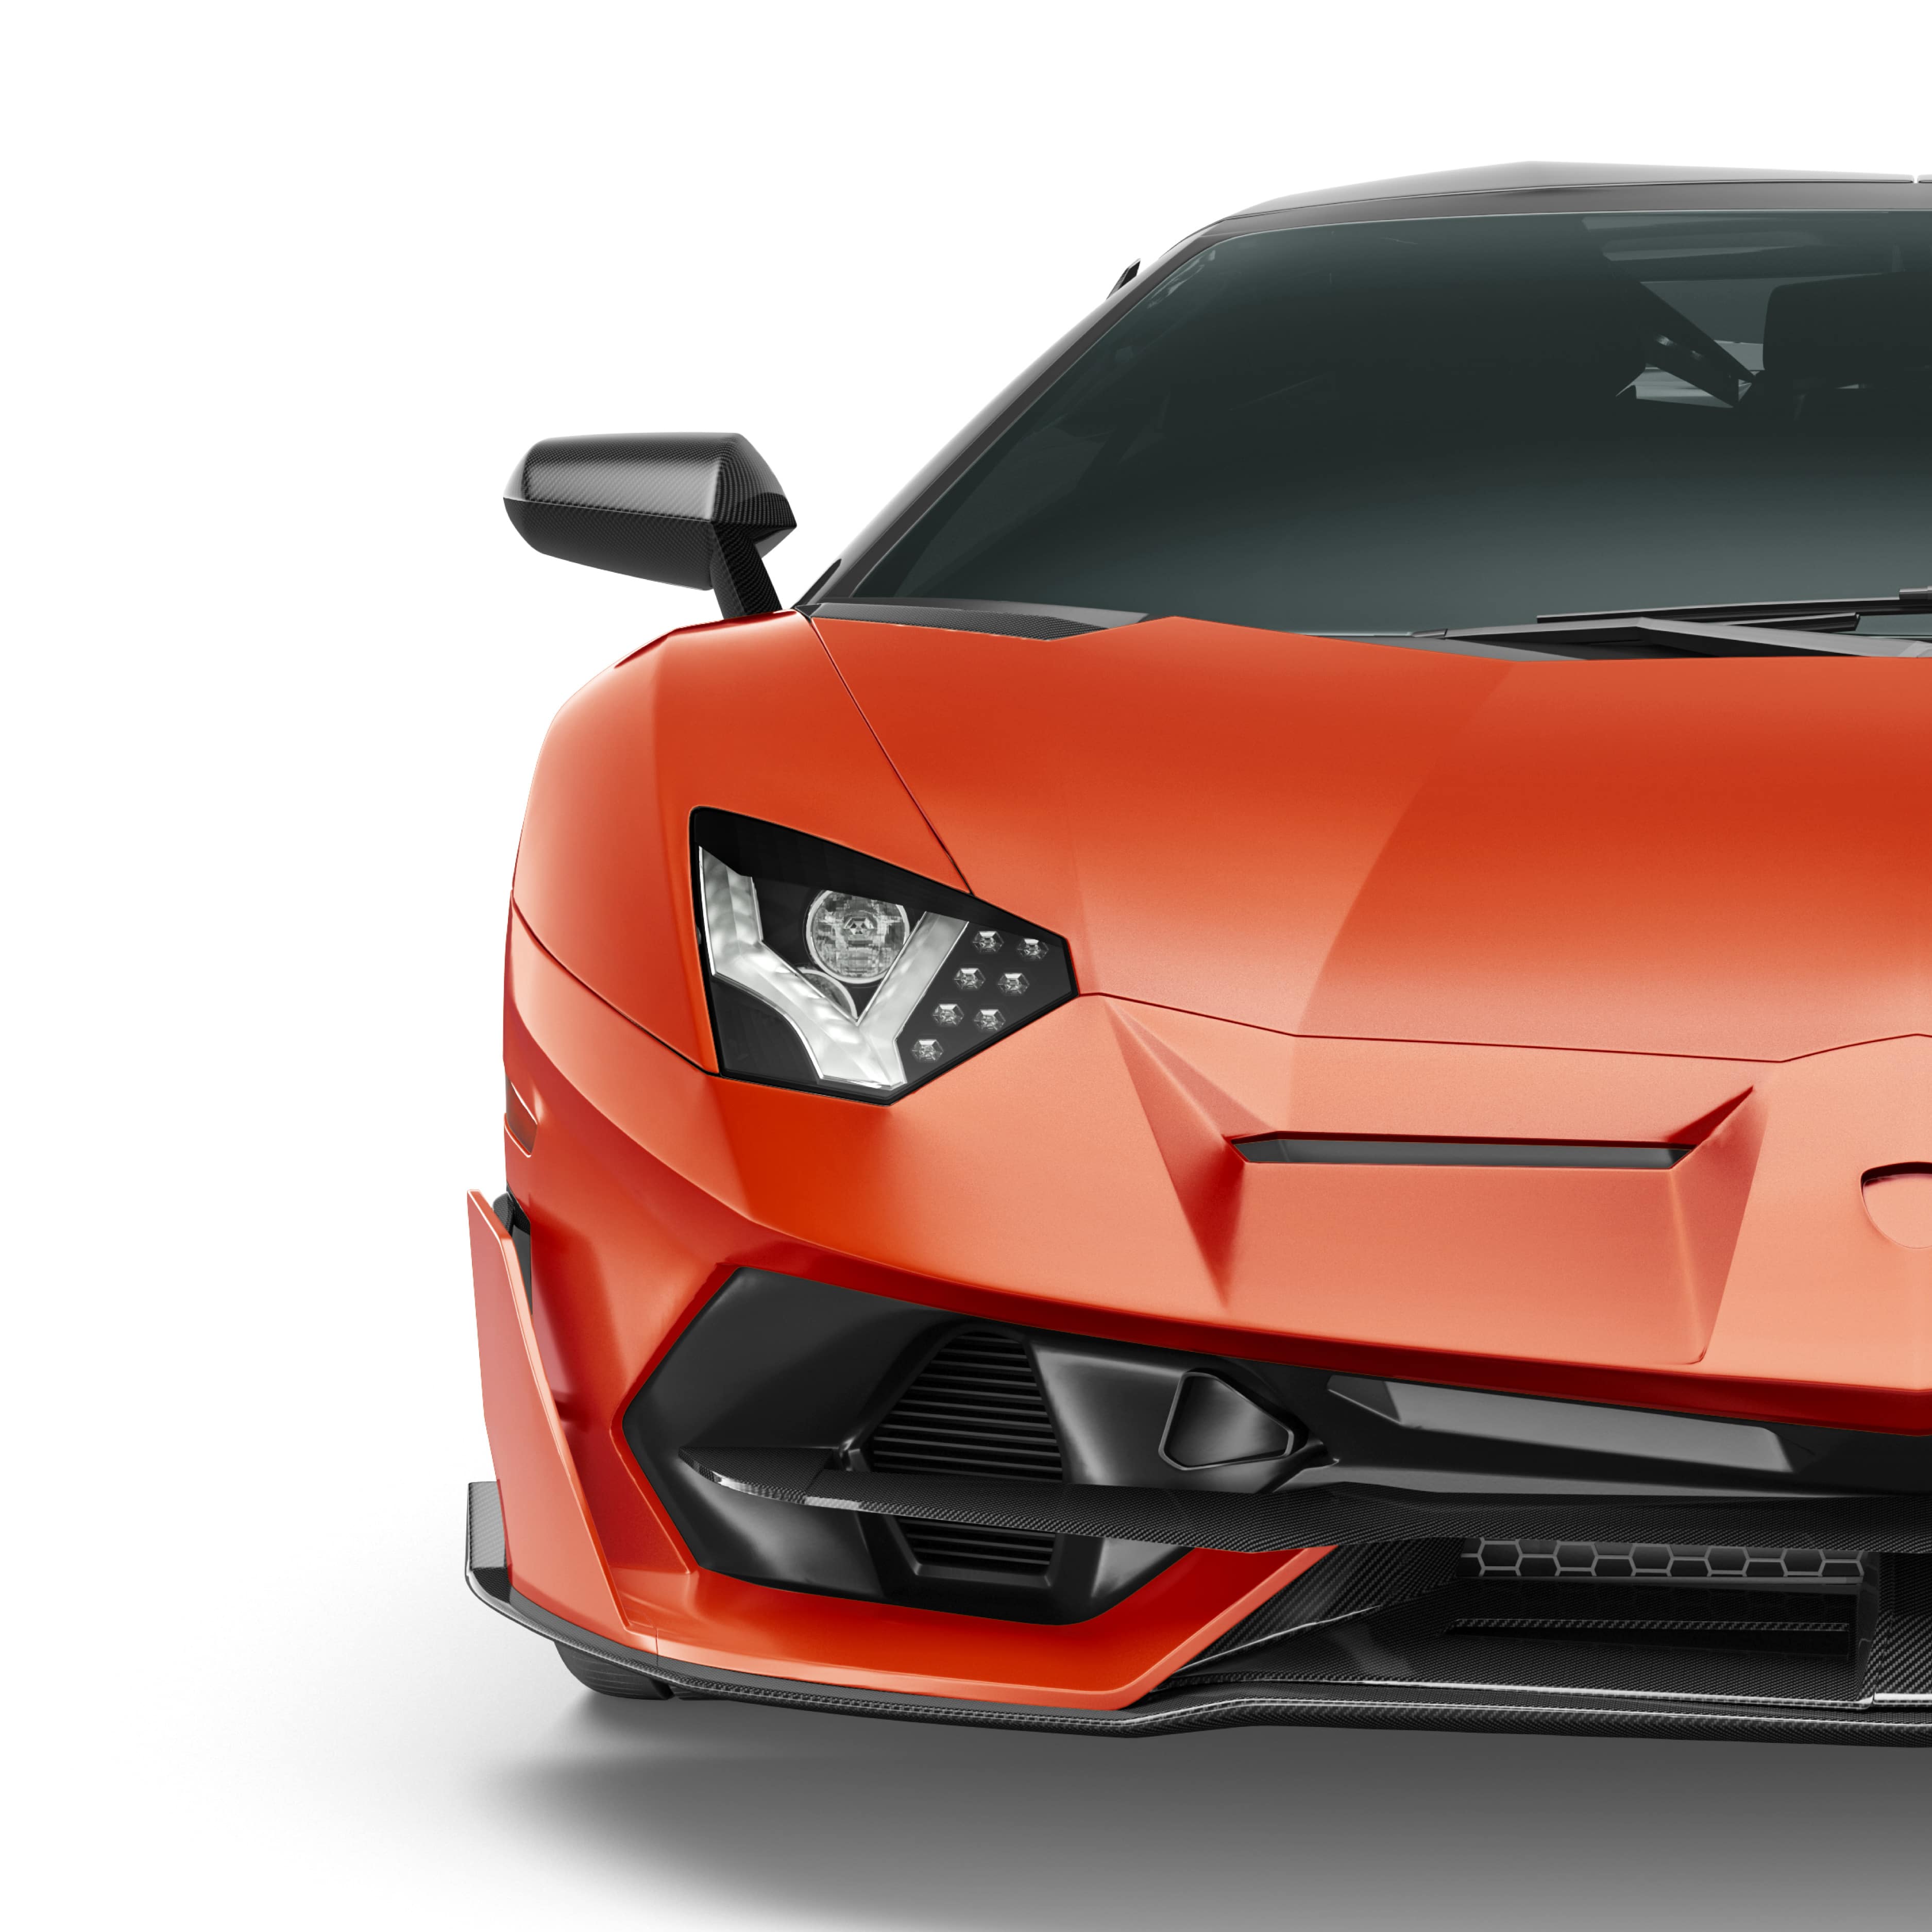 VViViD+ Matte Arancio Argos (Orange/Red Lamborghini)